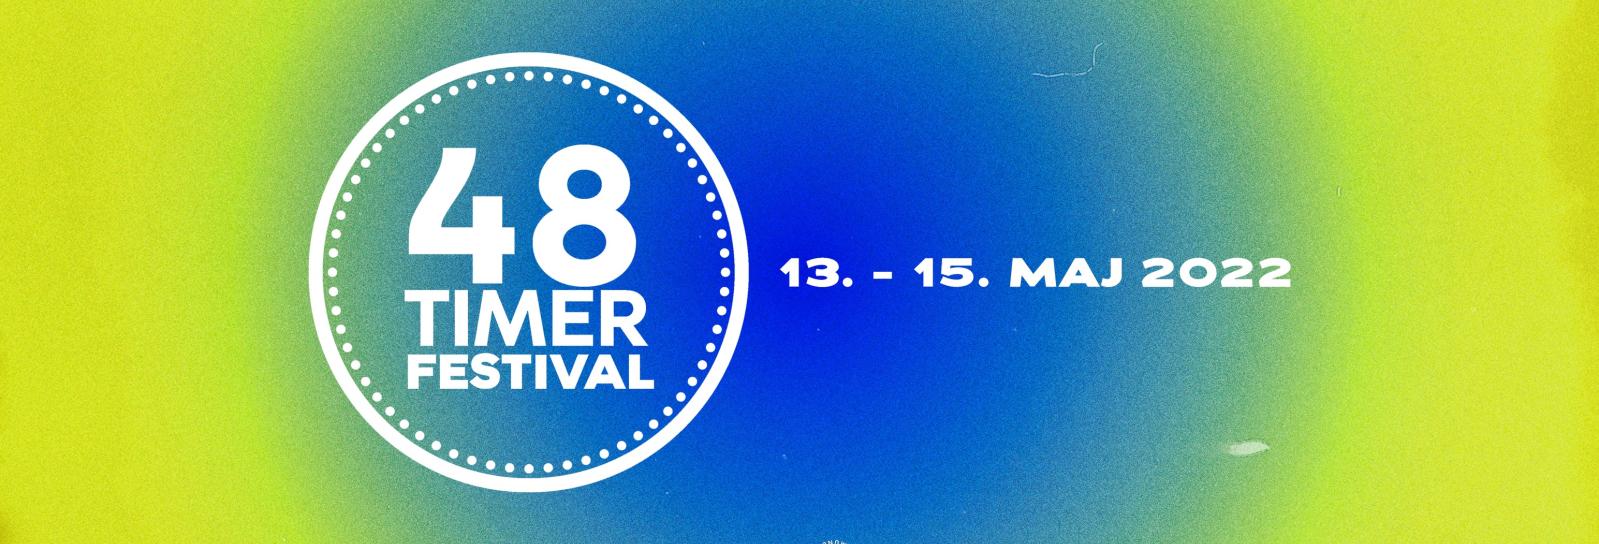 48 TIMER Festival 13.-15. maj 2022